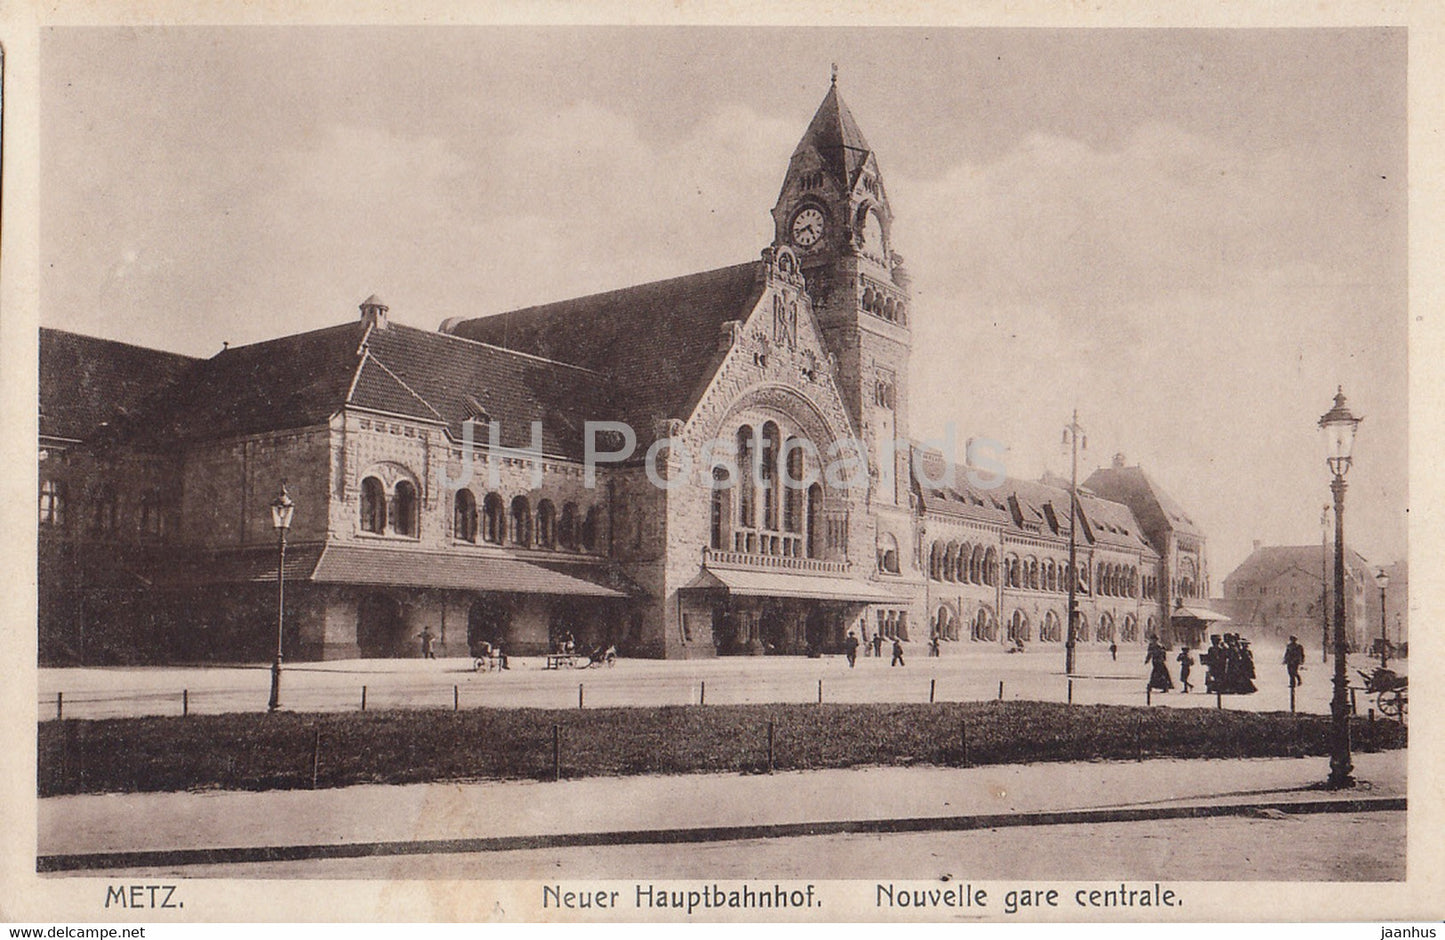 Metz - Neuer Hauptbahnhof - Nouvelle Gare centrale - railway station - old postcard - France - unused - JH Postcards